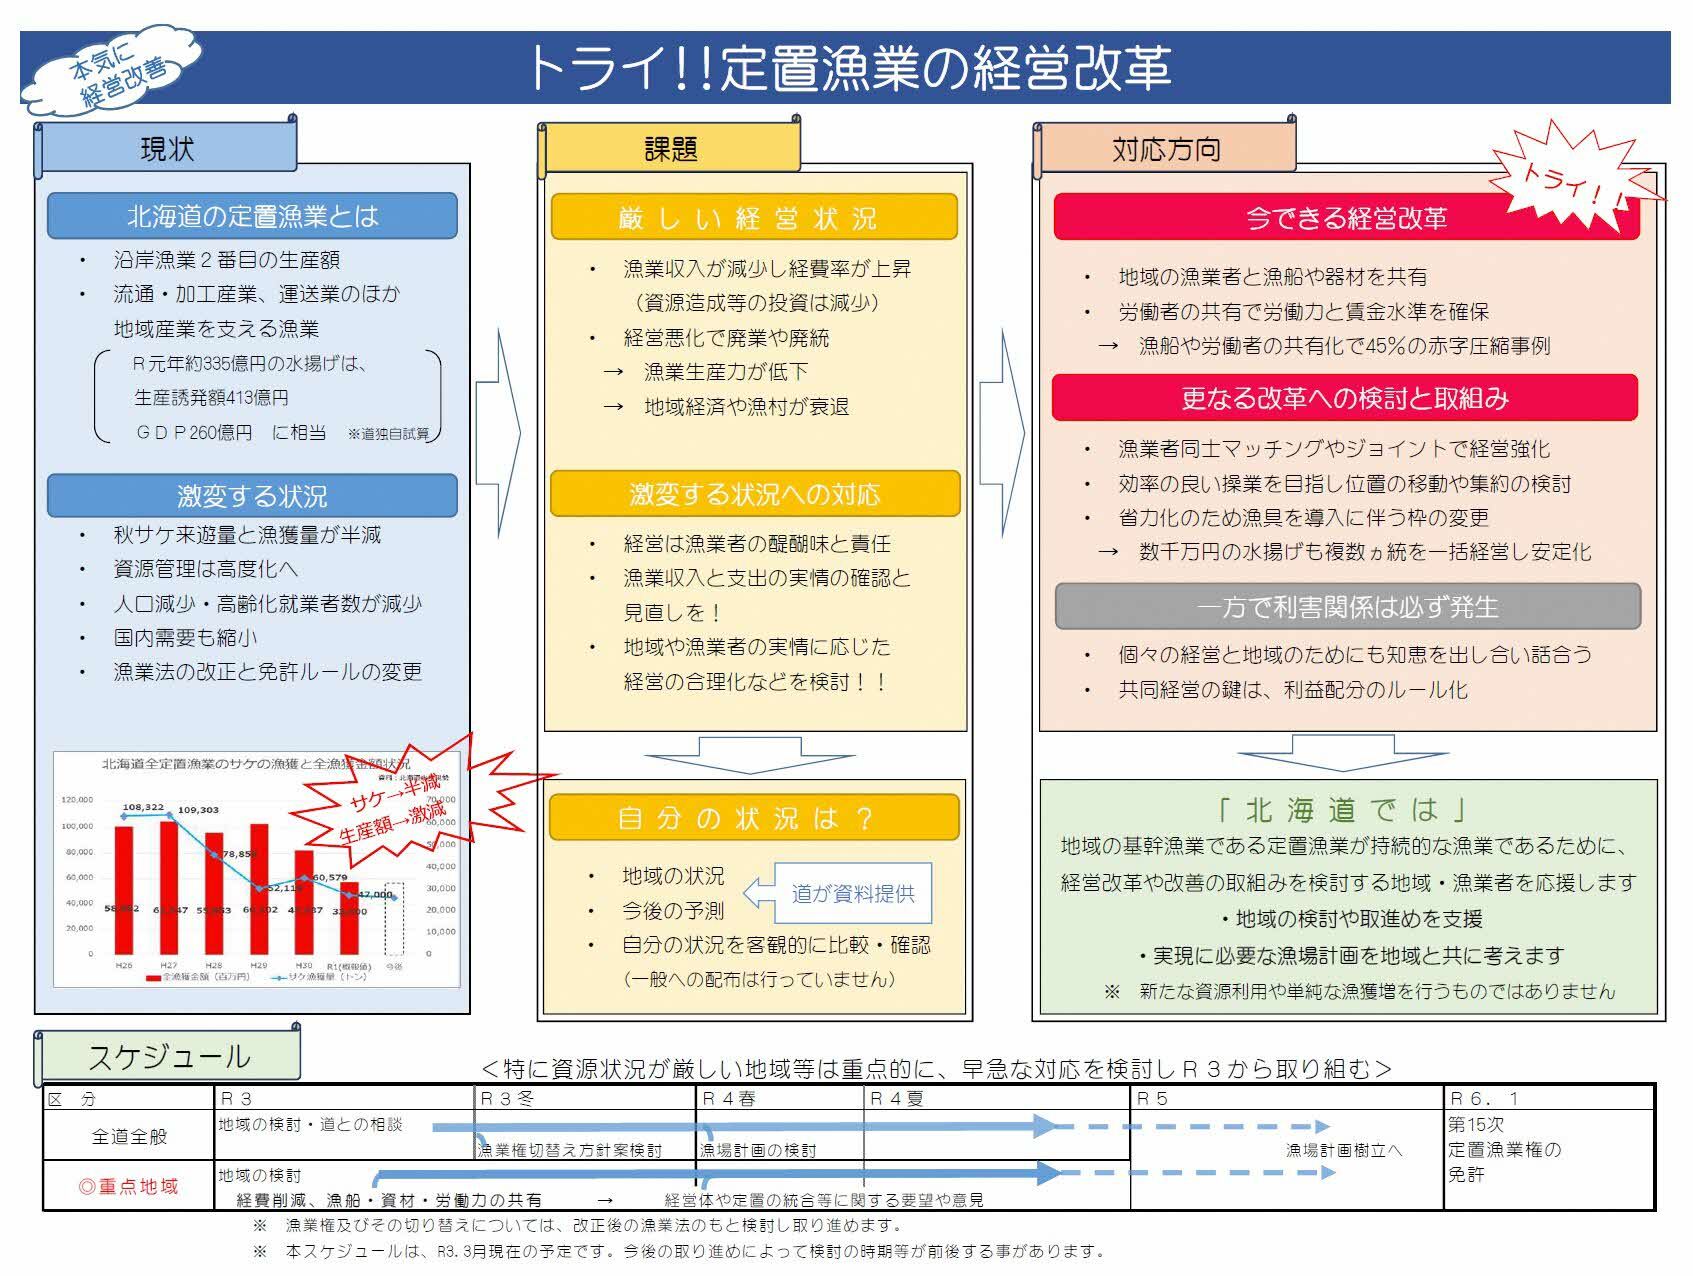 hokkaido_teichi_management_reform_summary.jpg